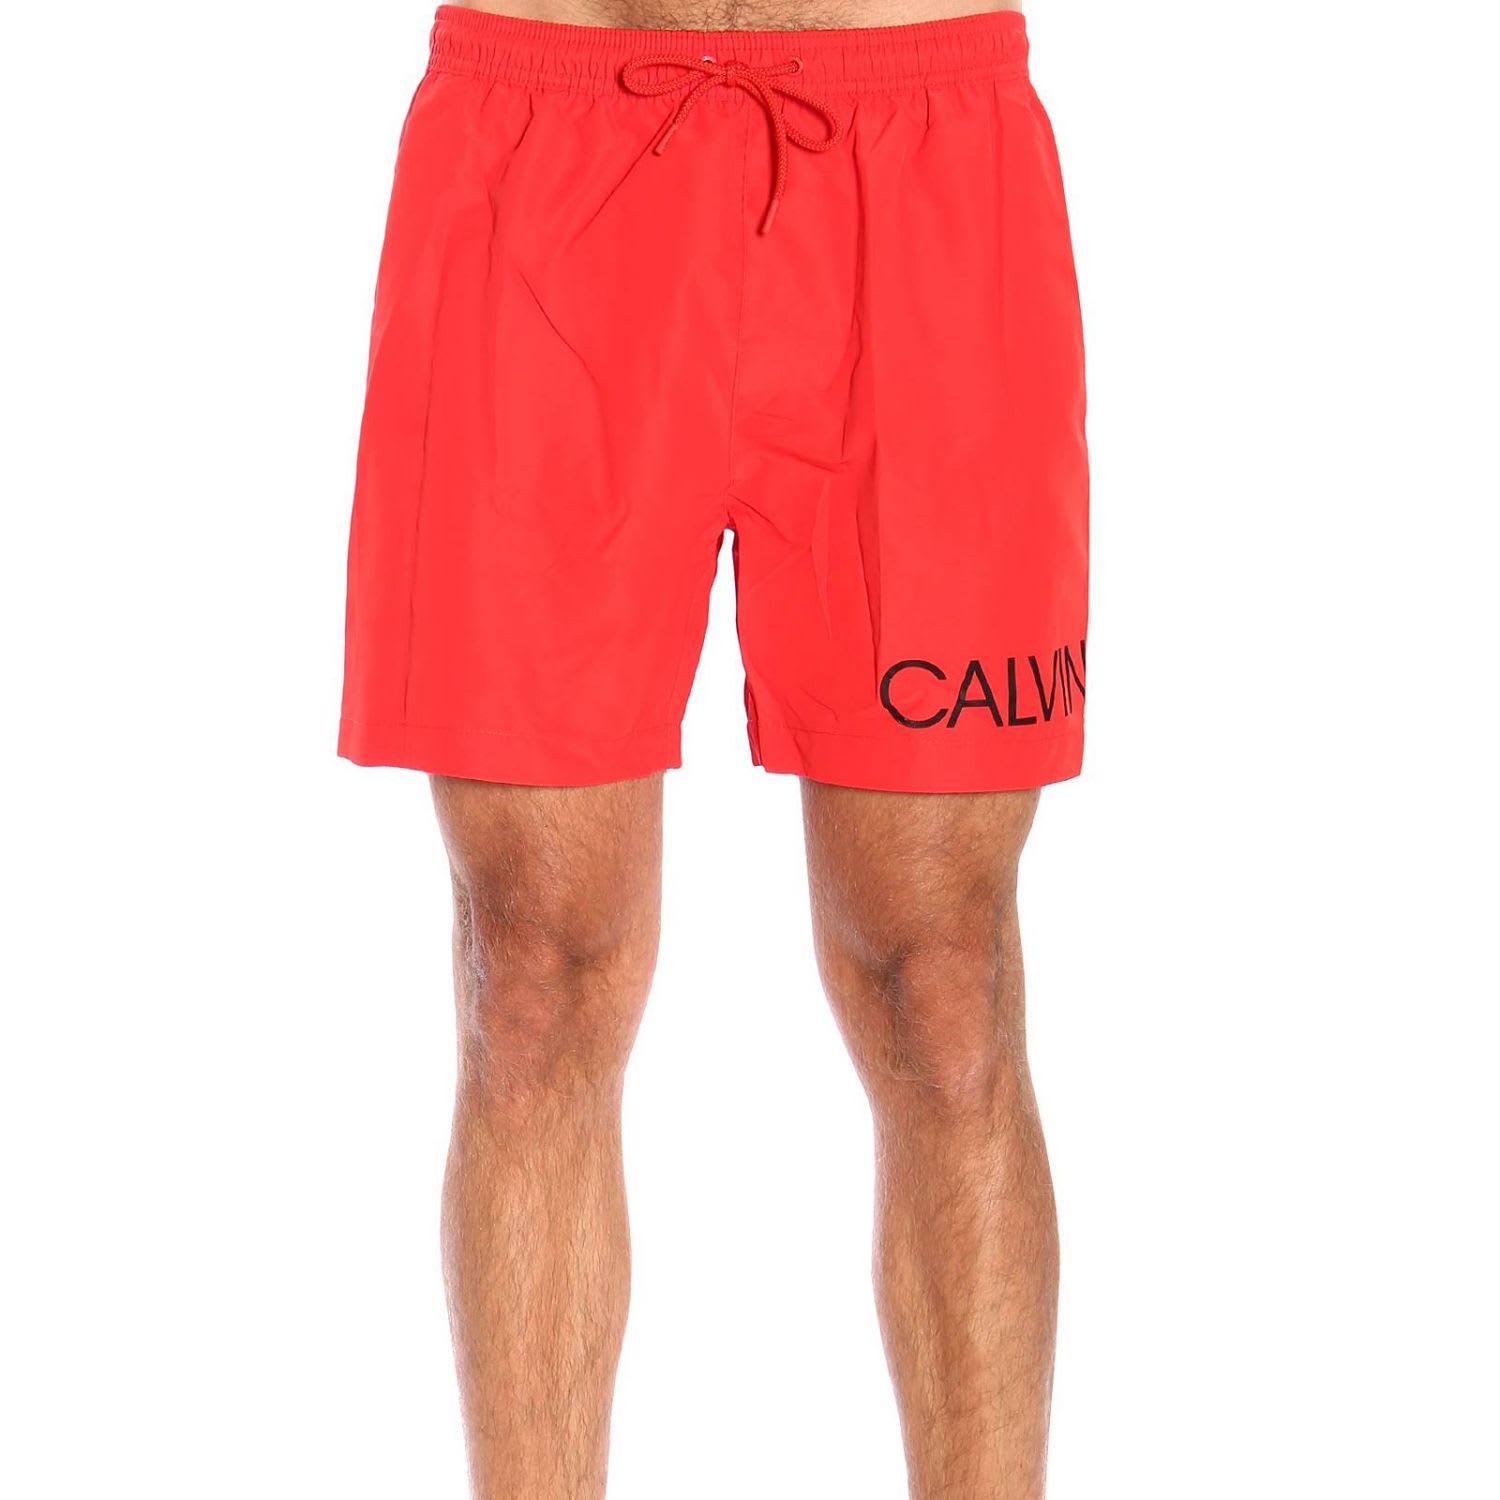 calvin klein swim shorts mens